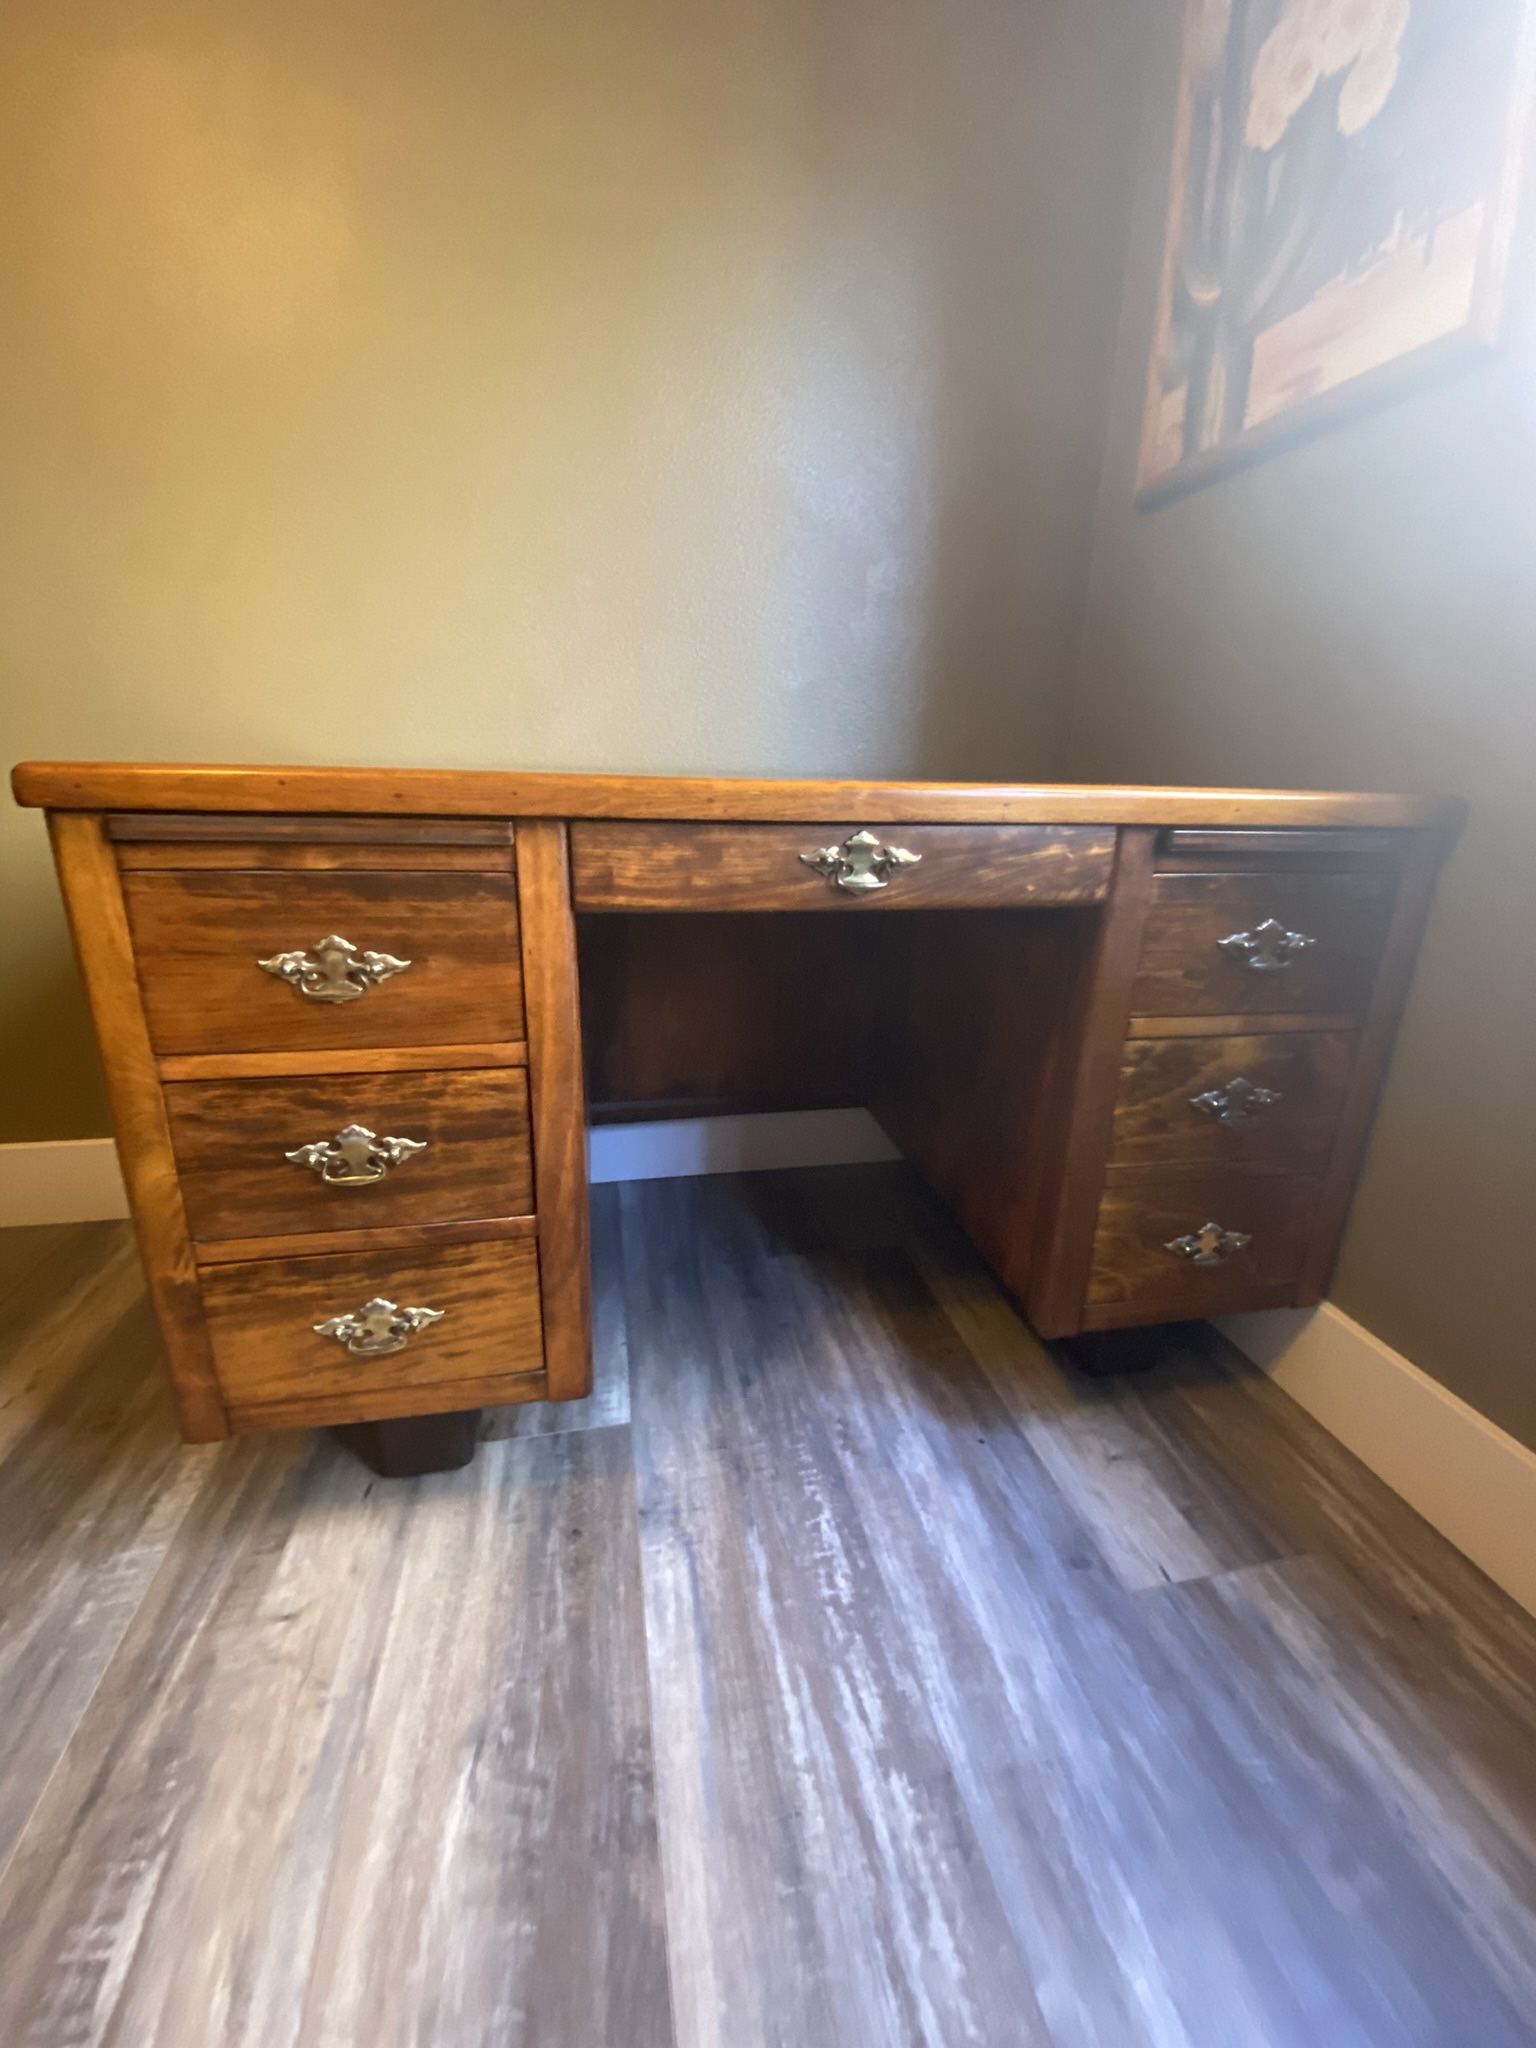 Wood Desk - Walnut - No Particle Board or MDF!